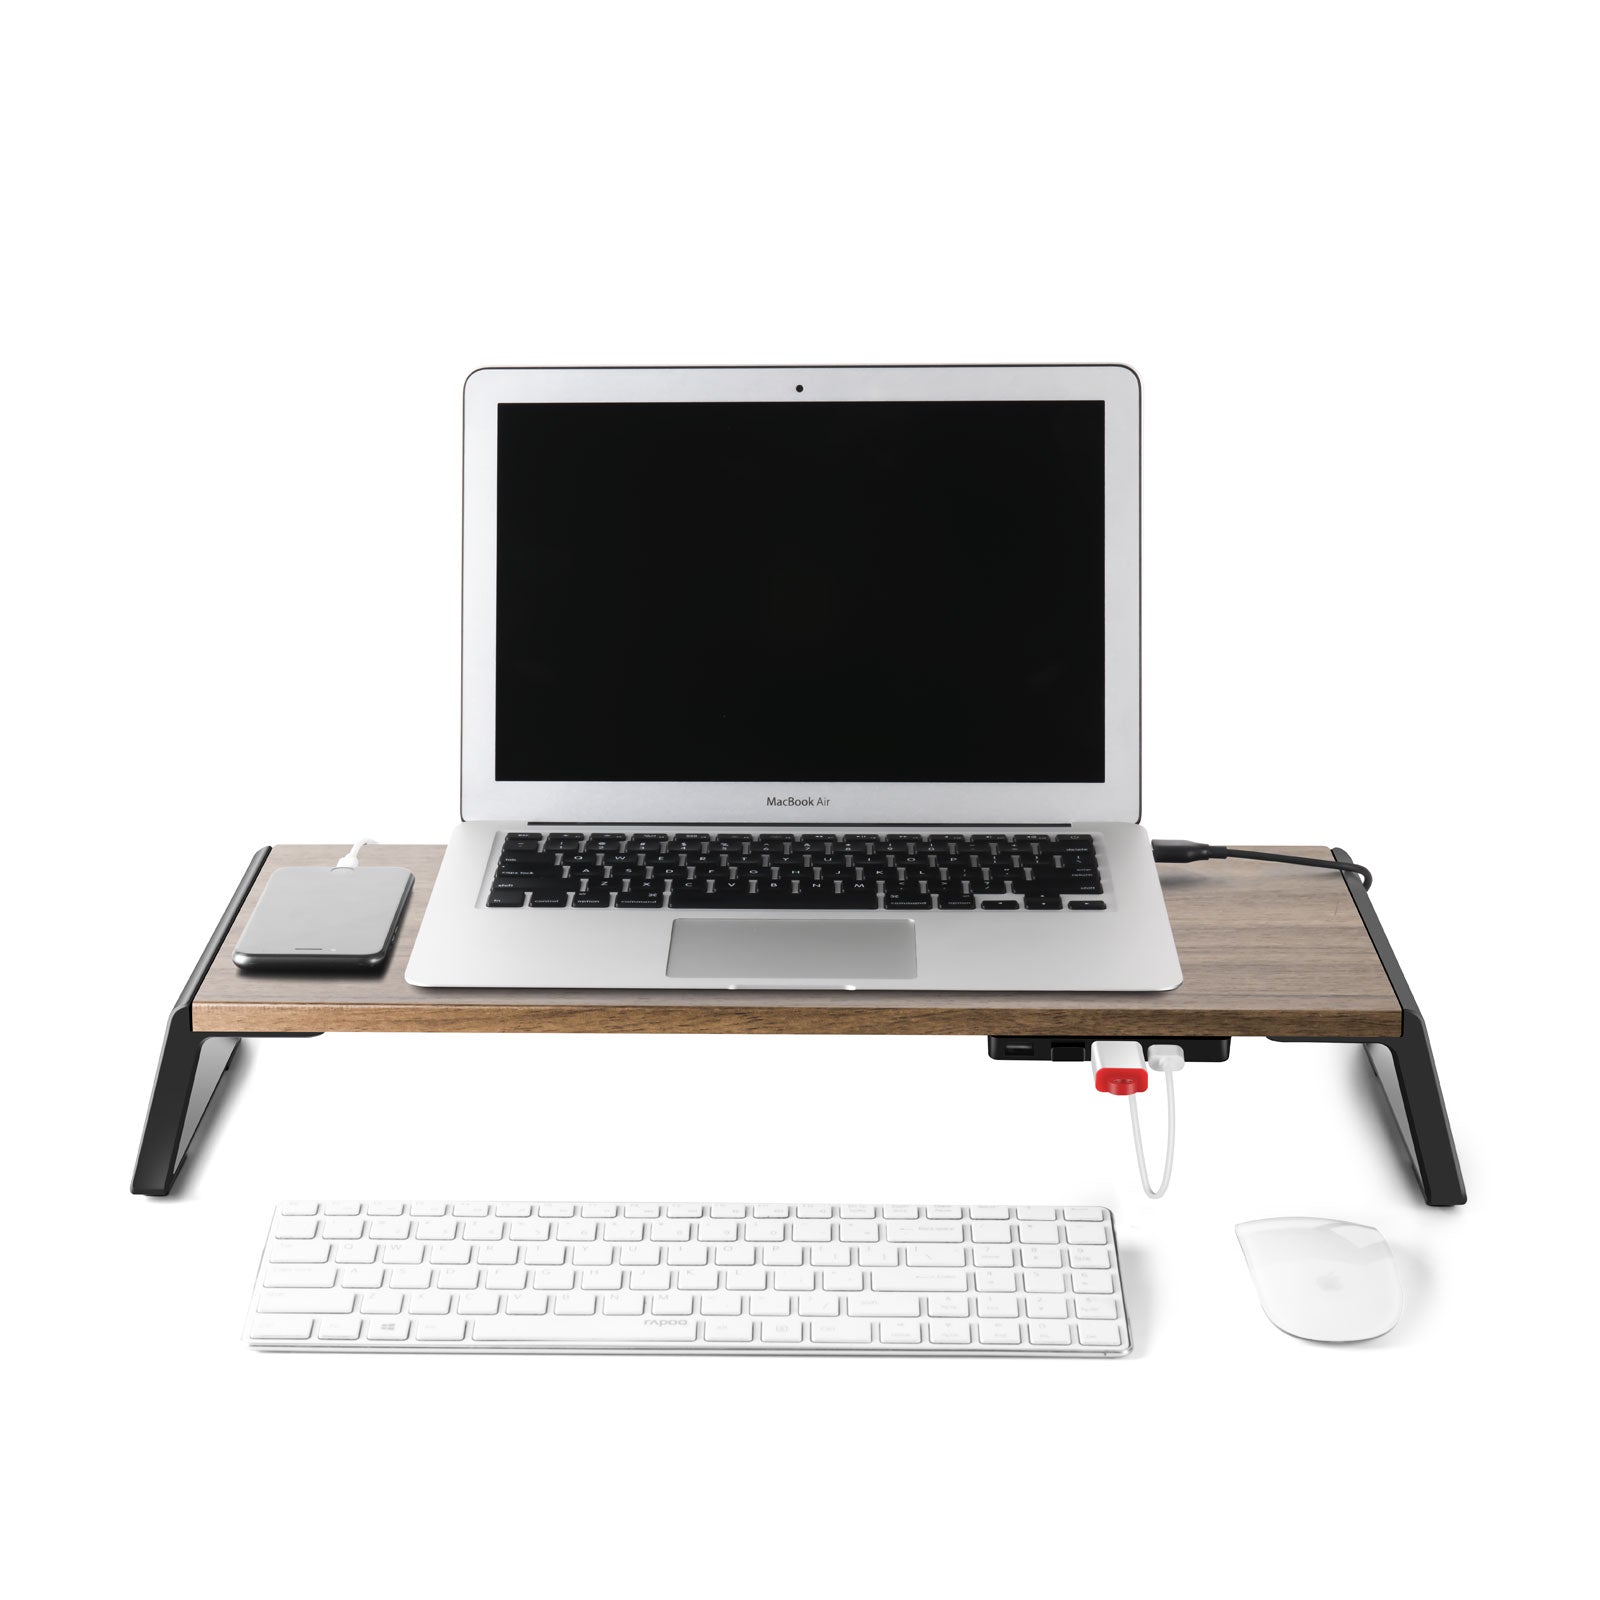 Desk Shelf with USB Extension Ports
VORII